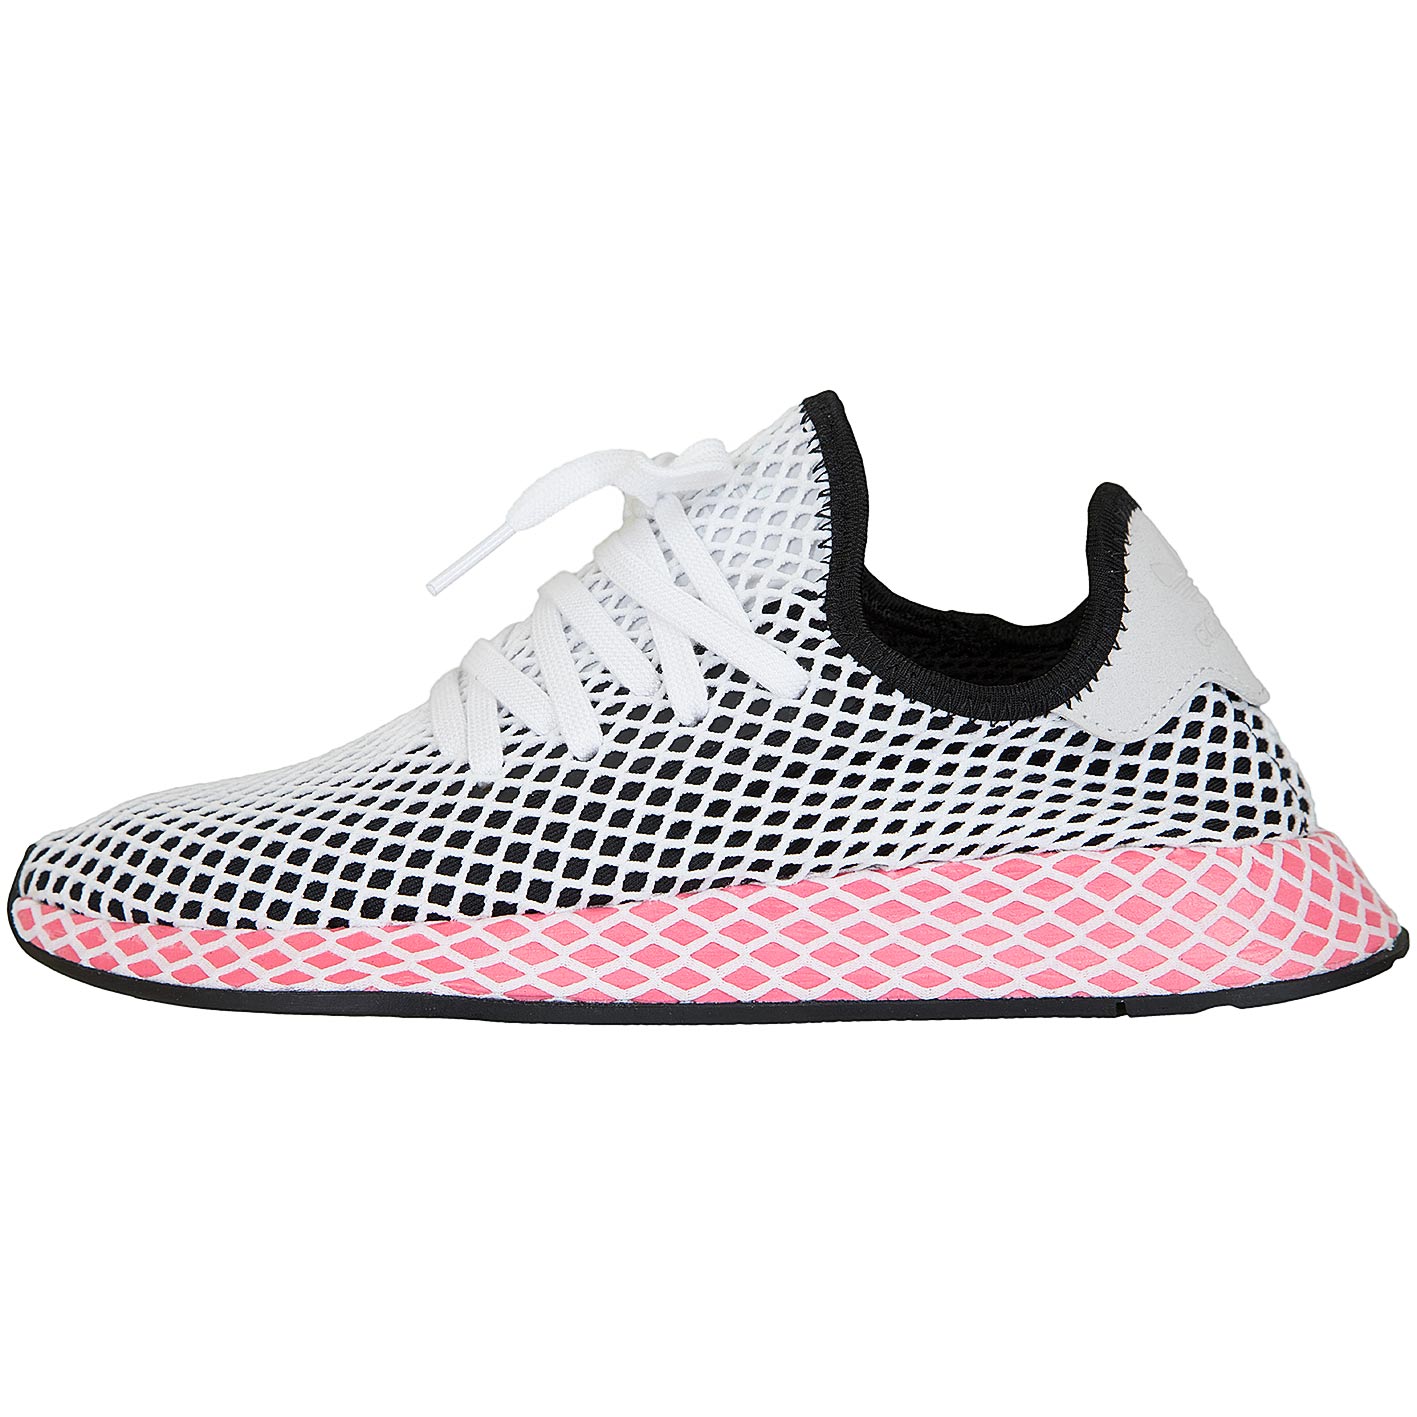 ☆ Adidas Originals Damen Sneaker Deerupt schwarz/weiß/pink hier bestellen!